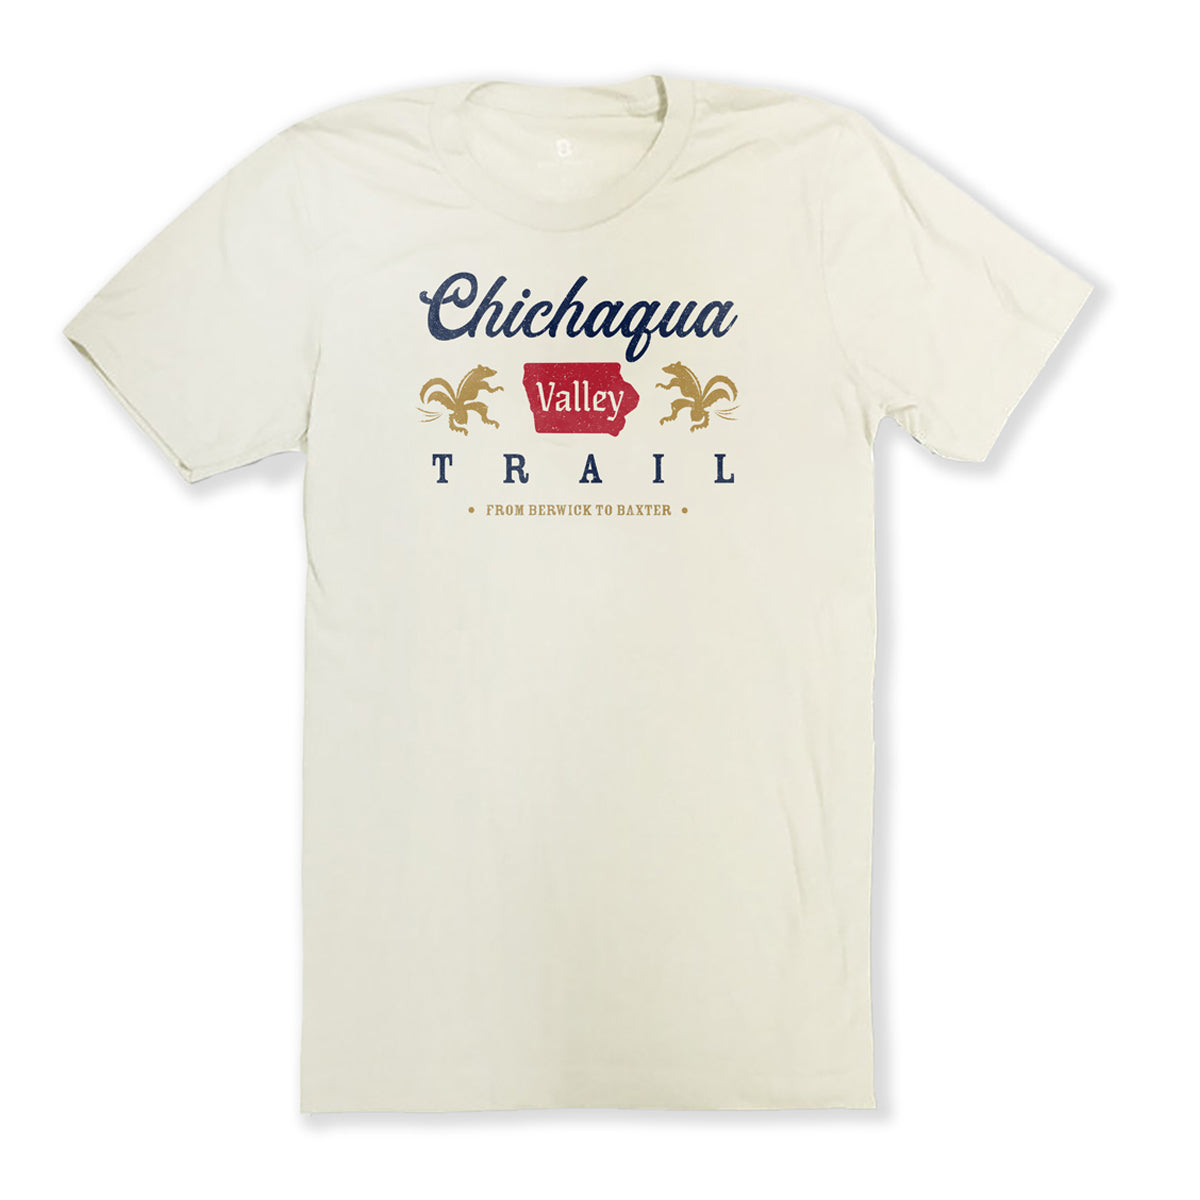 Chichaqua Valley Trail T-Shirt - Bozz Prints